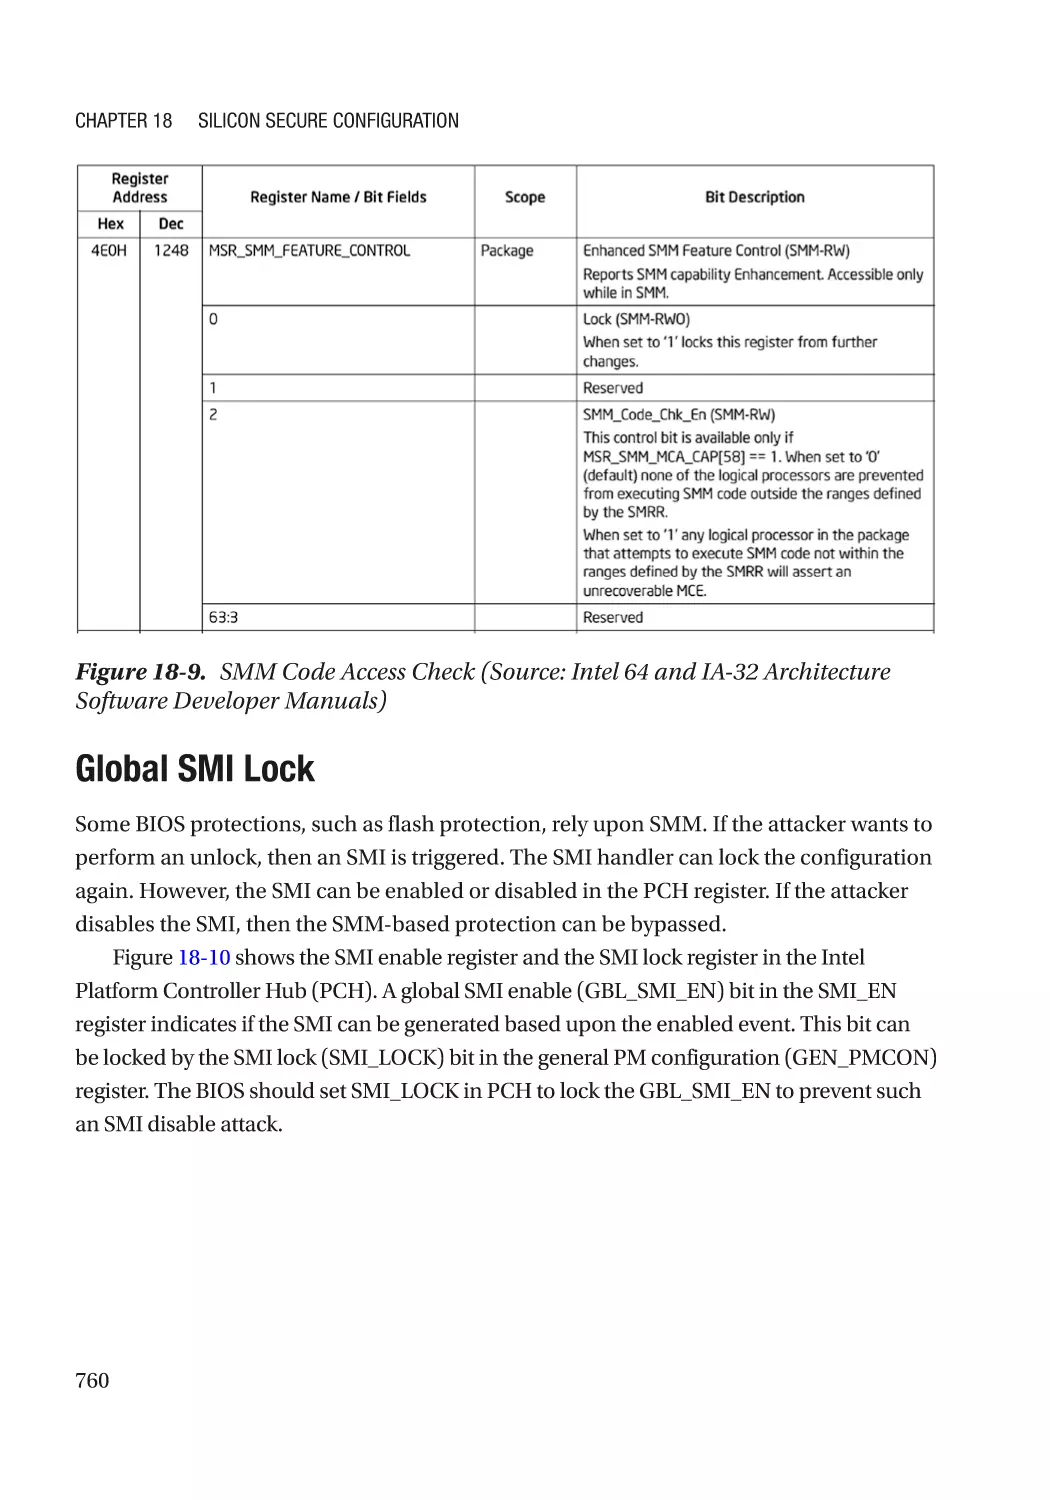 Global SMI Lock